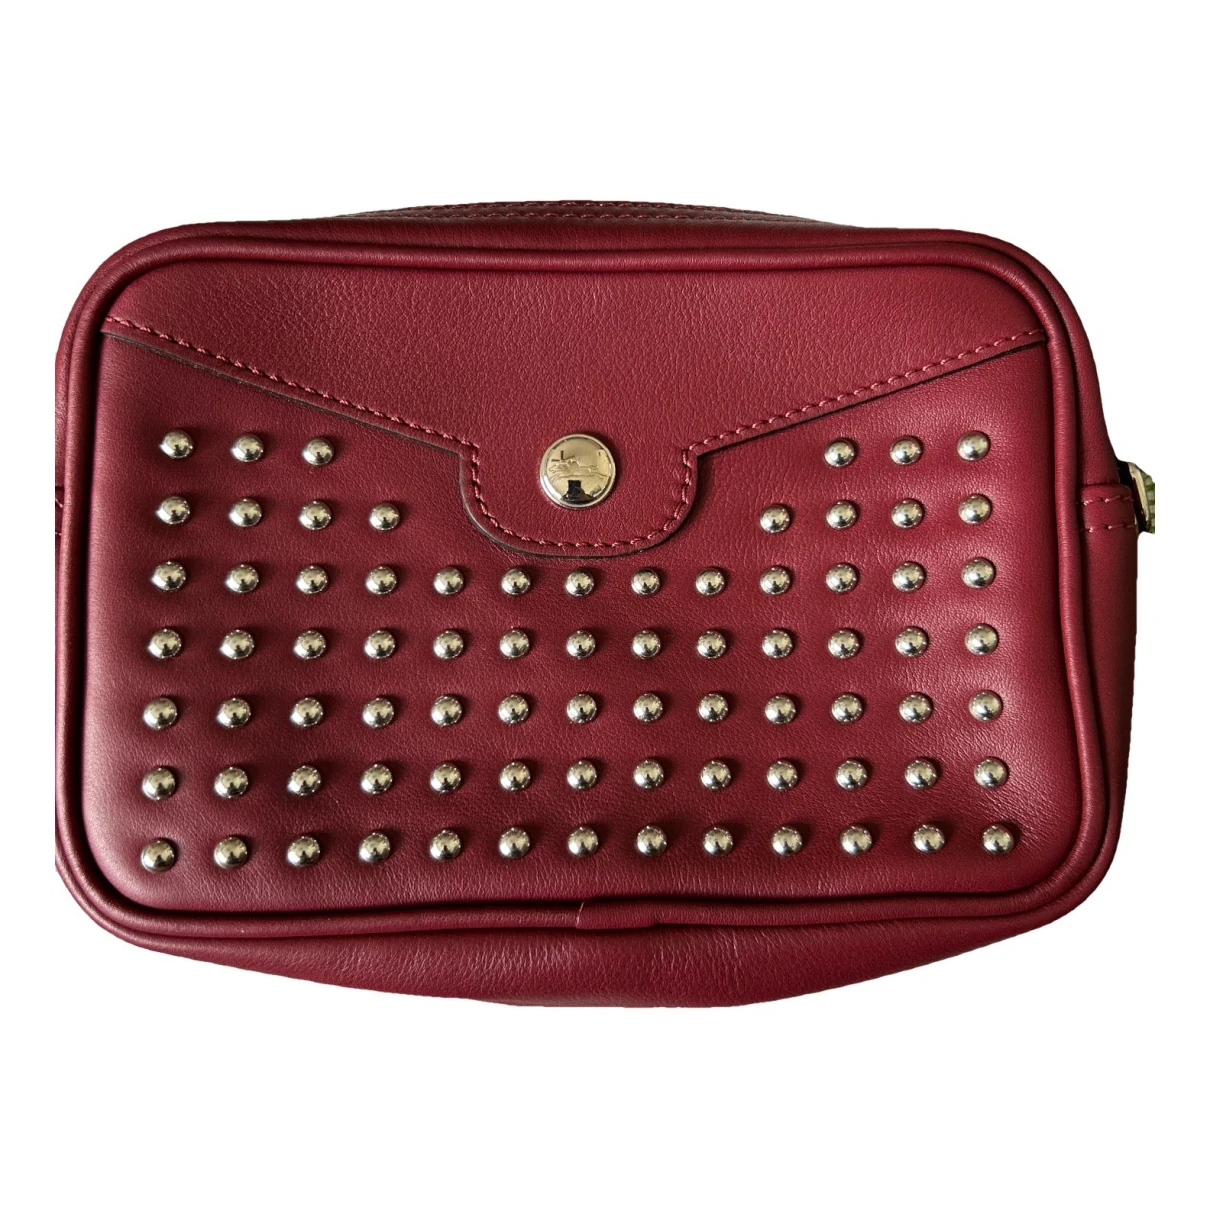 Pre-owned Longchamp Mademoiselle Leather Handbag In Burgundy